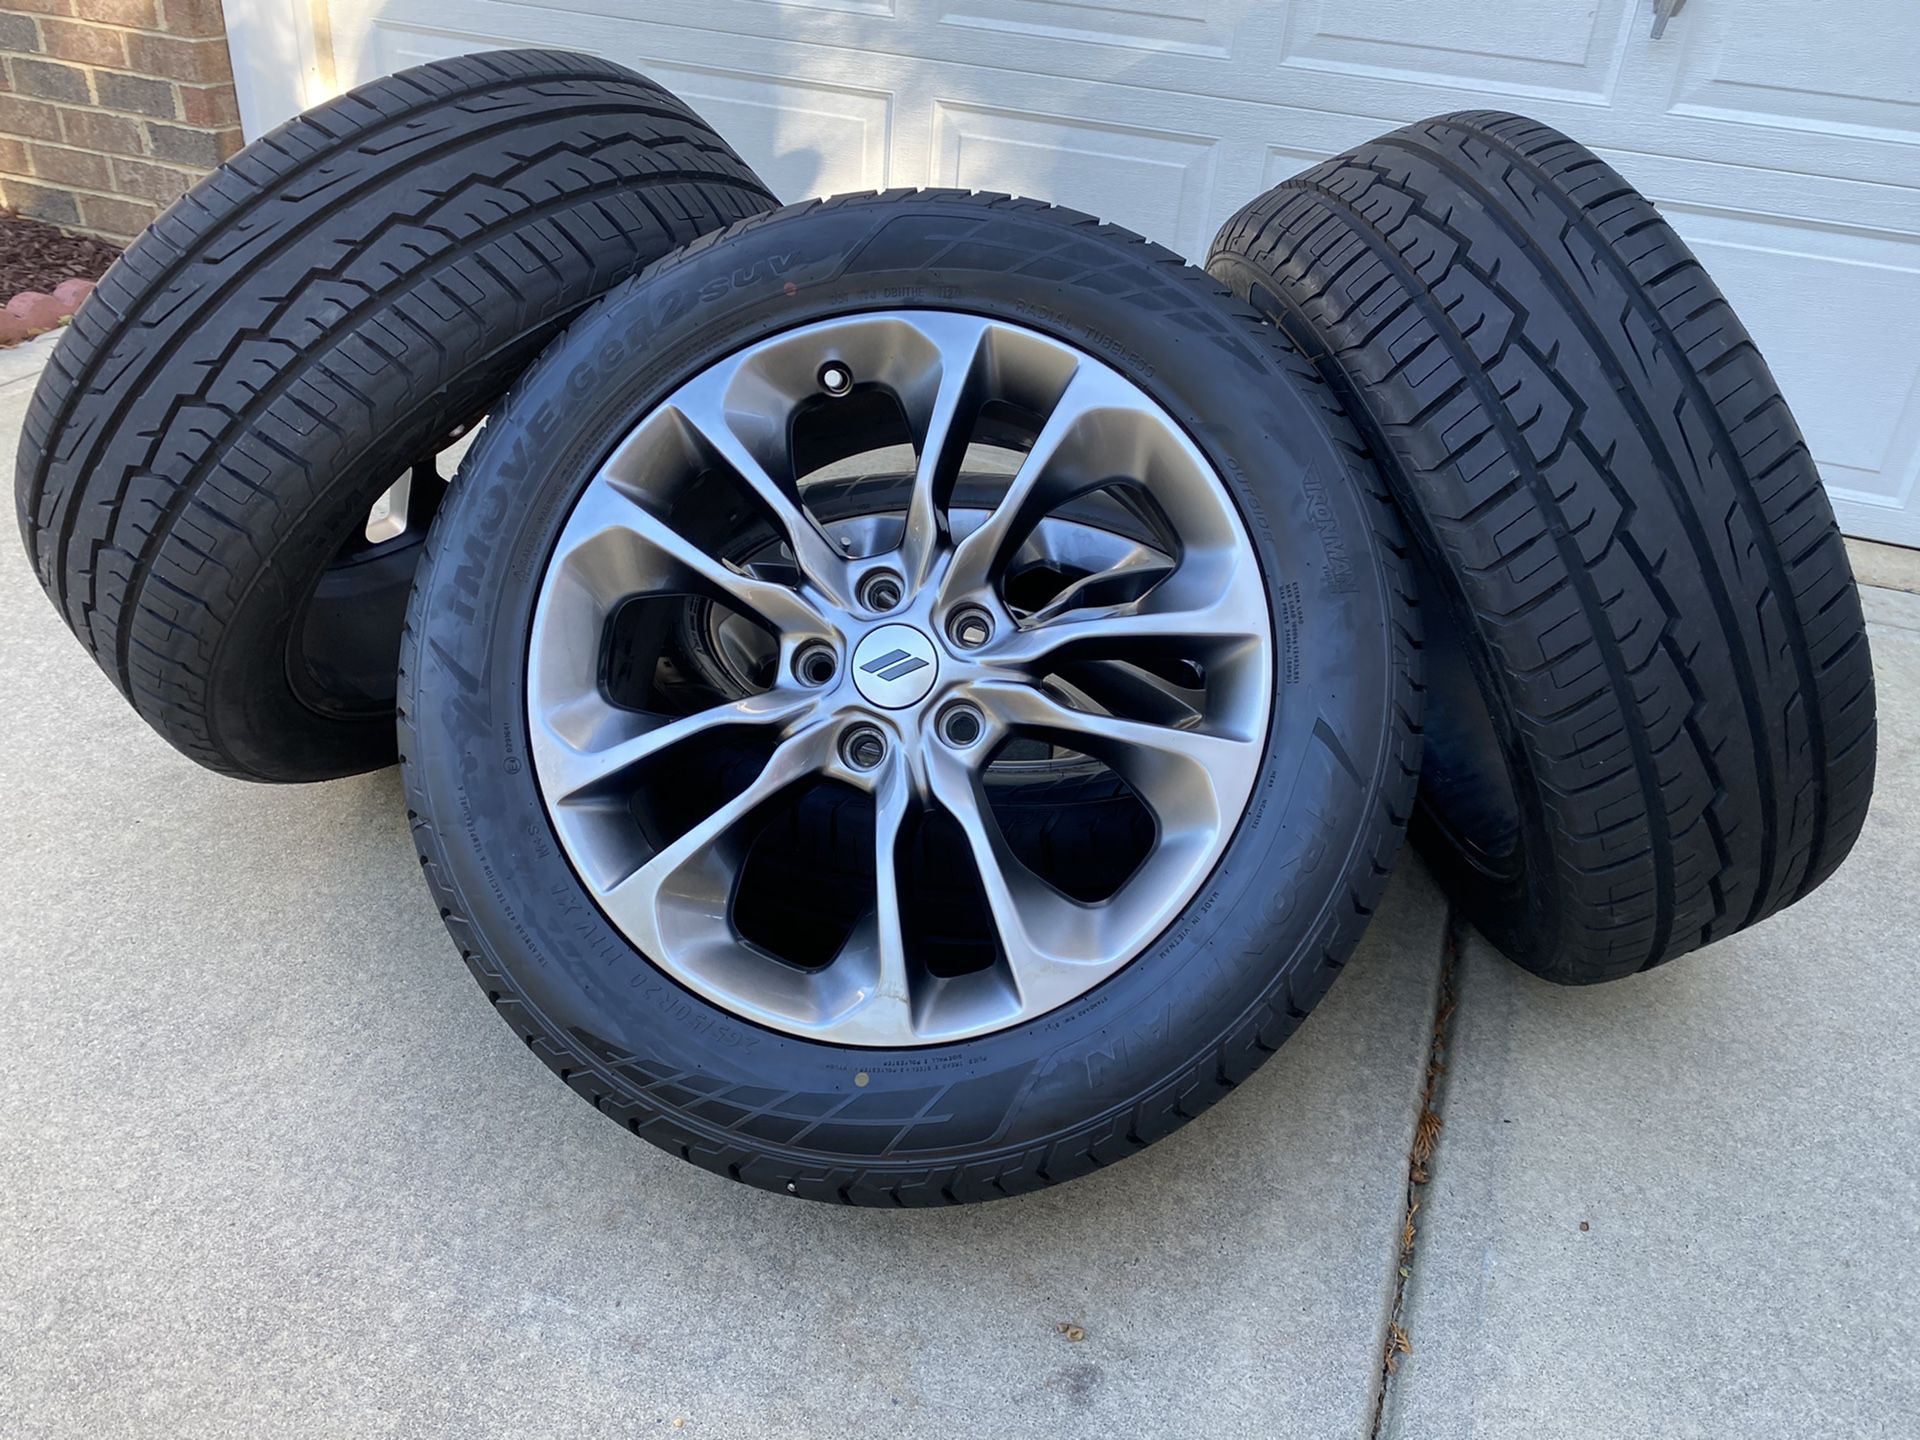 20” Dodge Durango RT sport supercharged 5 lug grey wheels NEW tires Jeep Cherokee rims oem factory Mopar